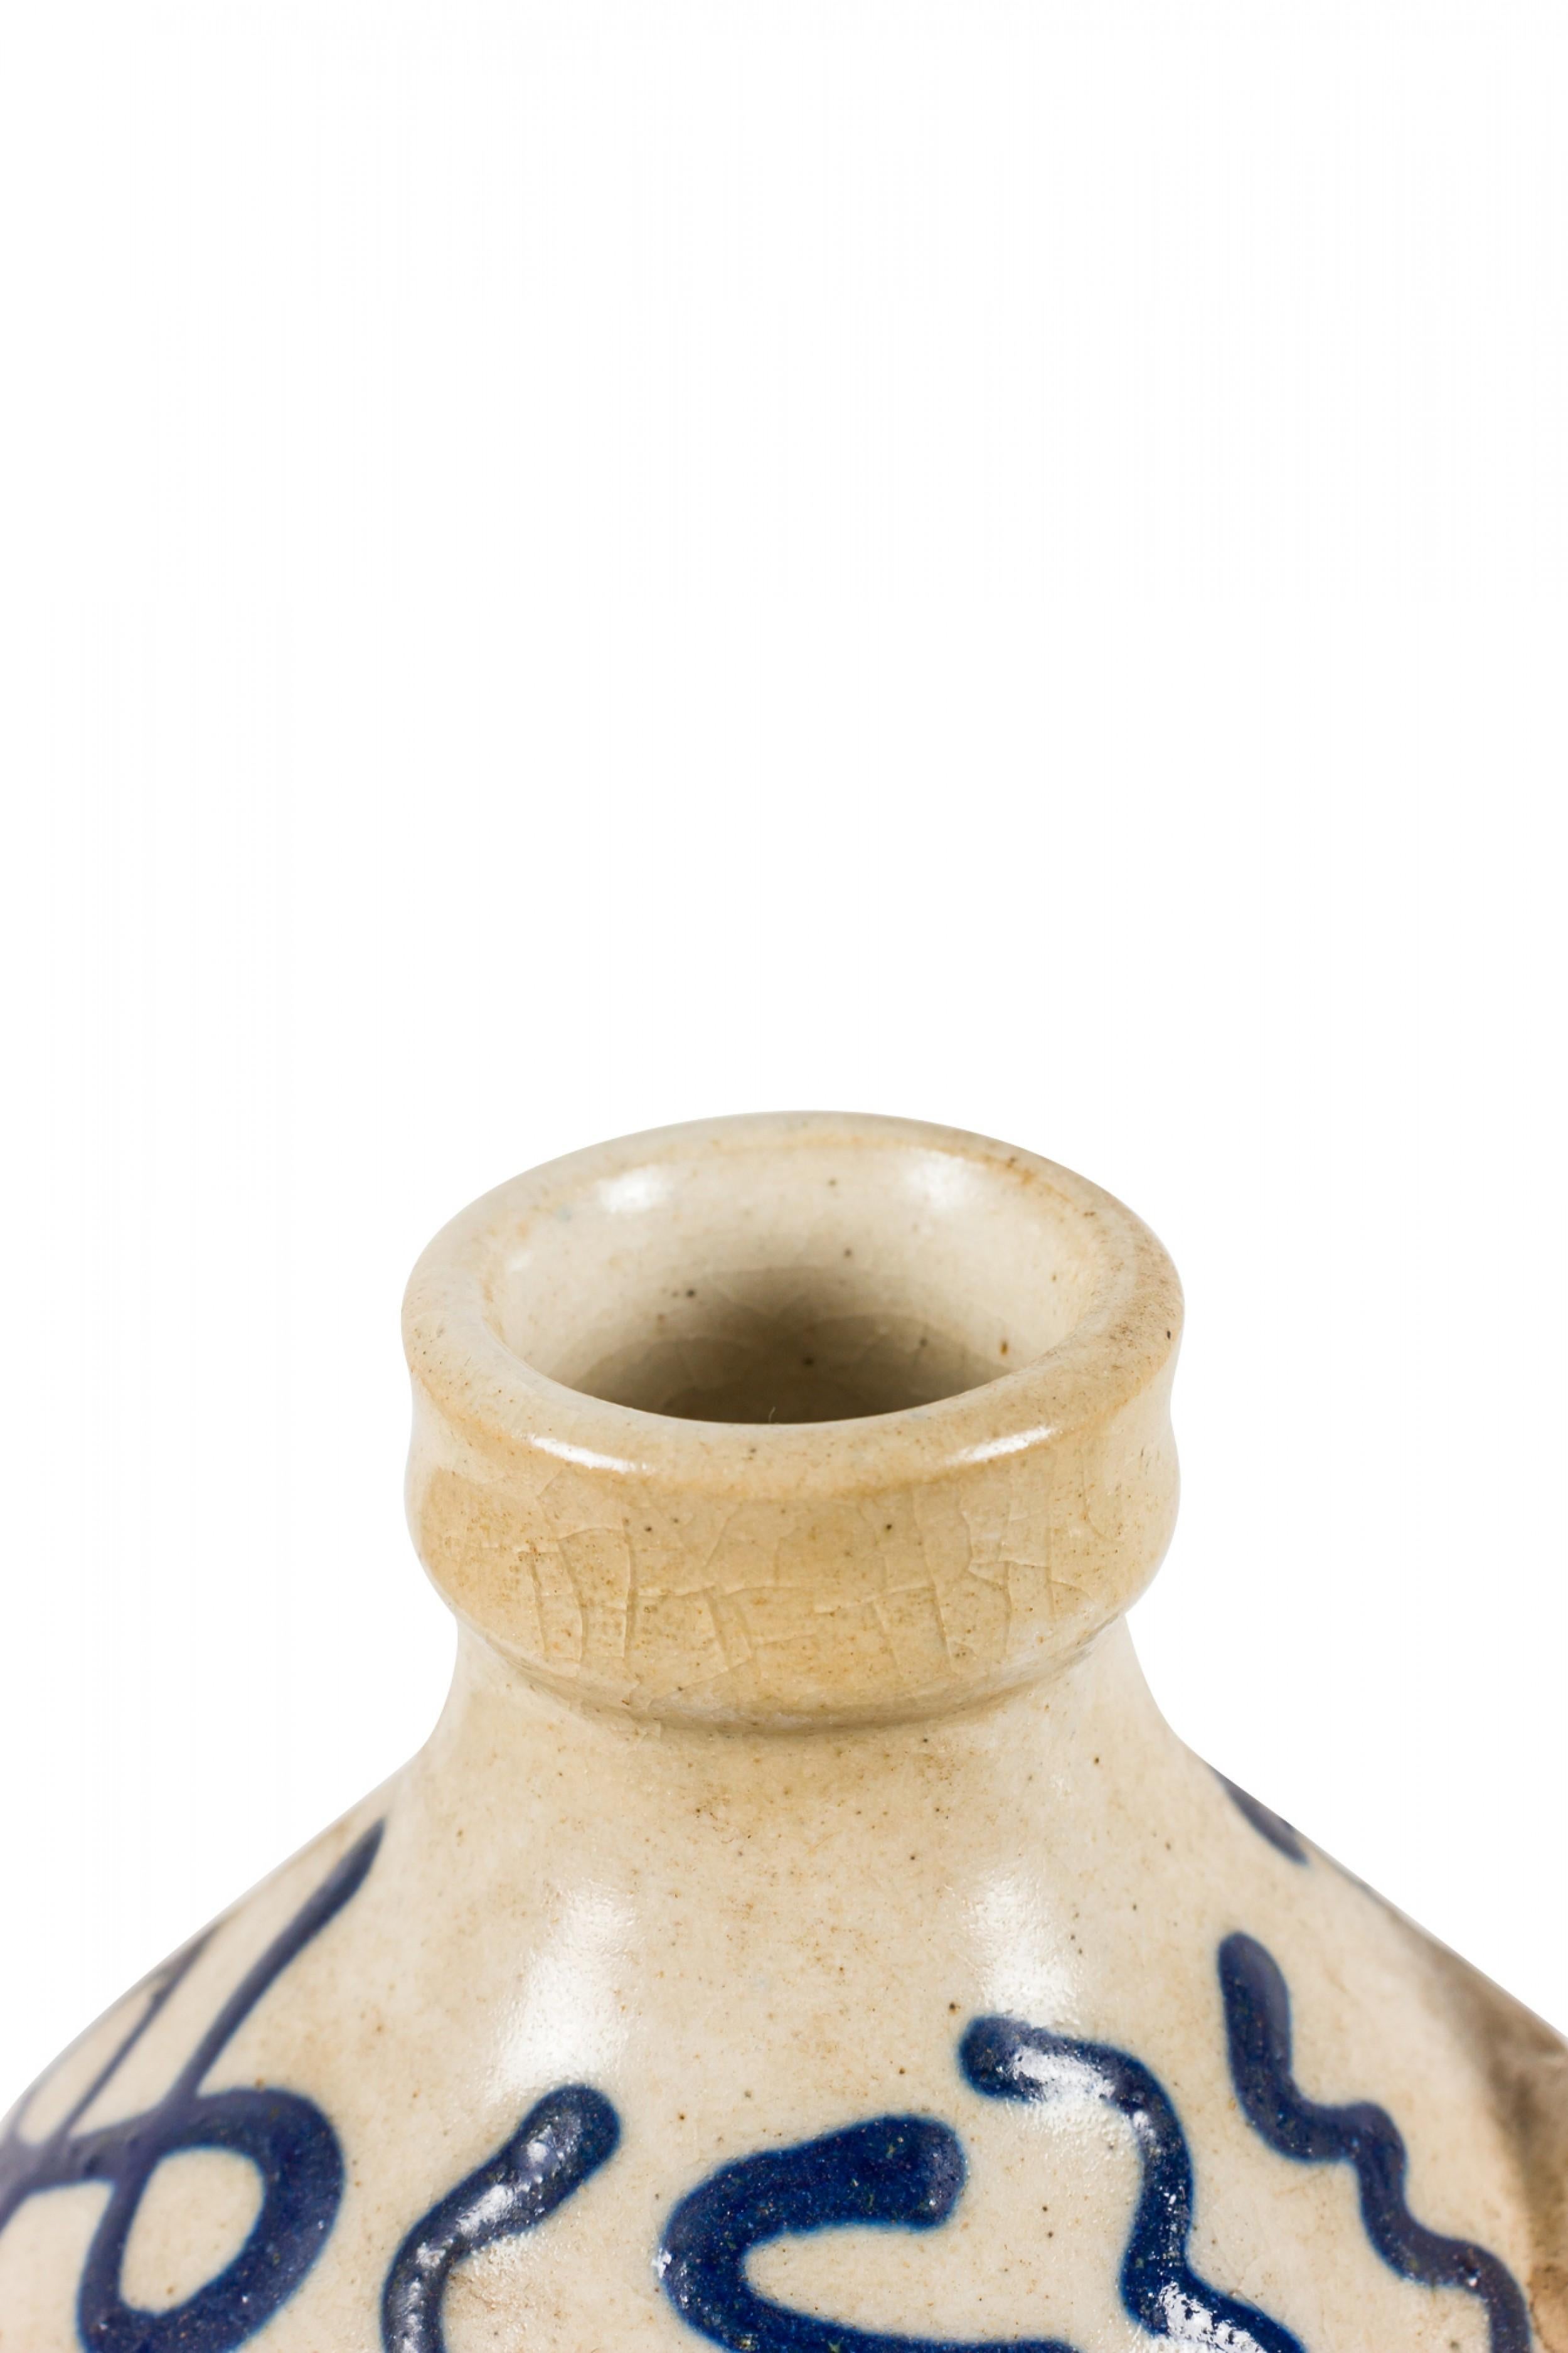 East German Mid-Century ceramic bottle vase with a geometric and sunburst pattern in dark blue against a cream-colored glazed ground with a small handle. (Bischofswerdaer Braun & Kunsttöpferei, mark and label on bottom, B BTK 11/2).